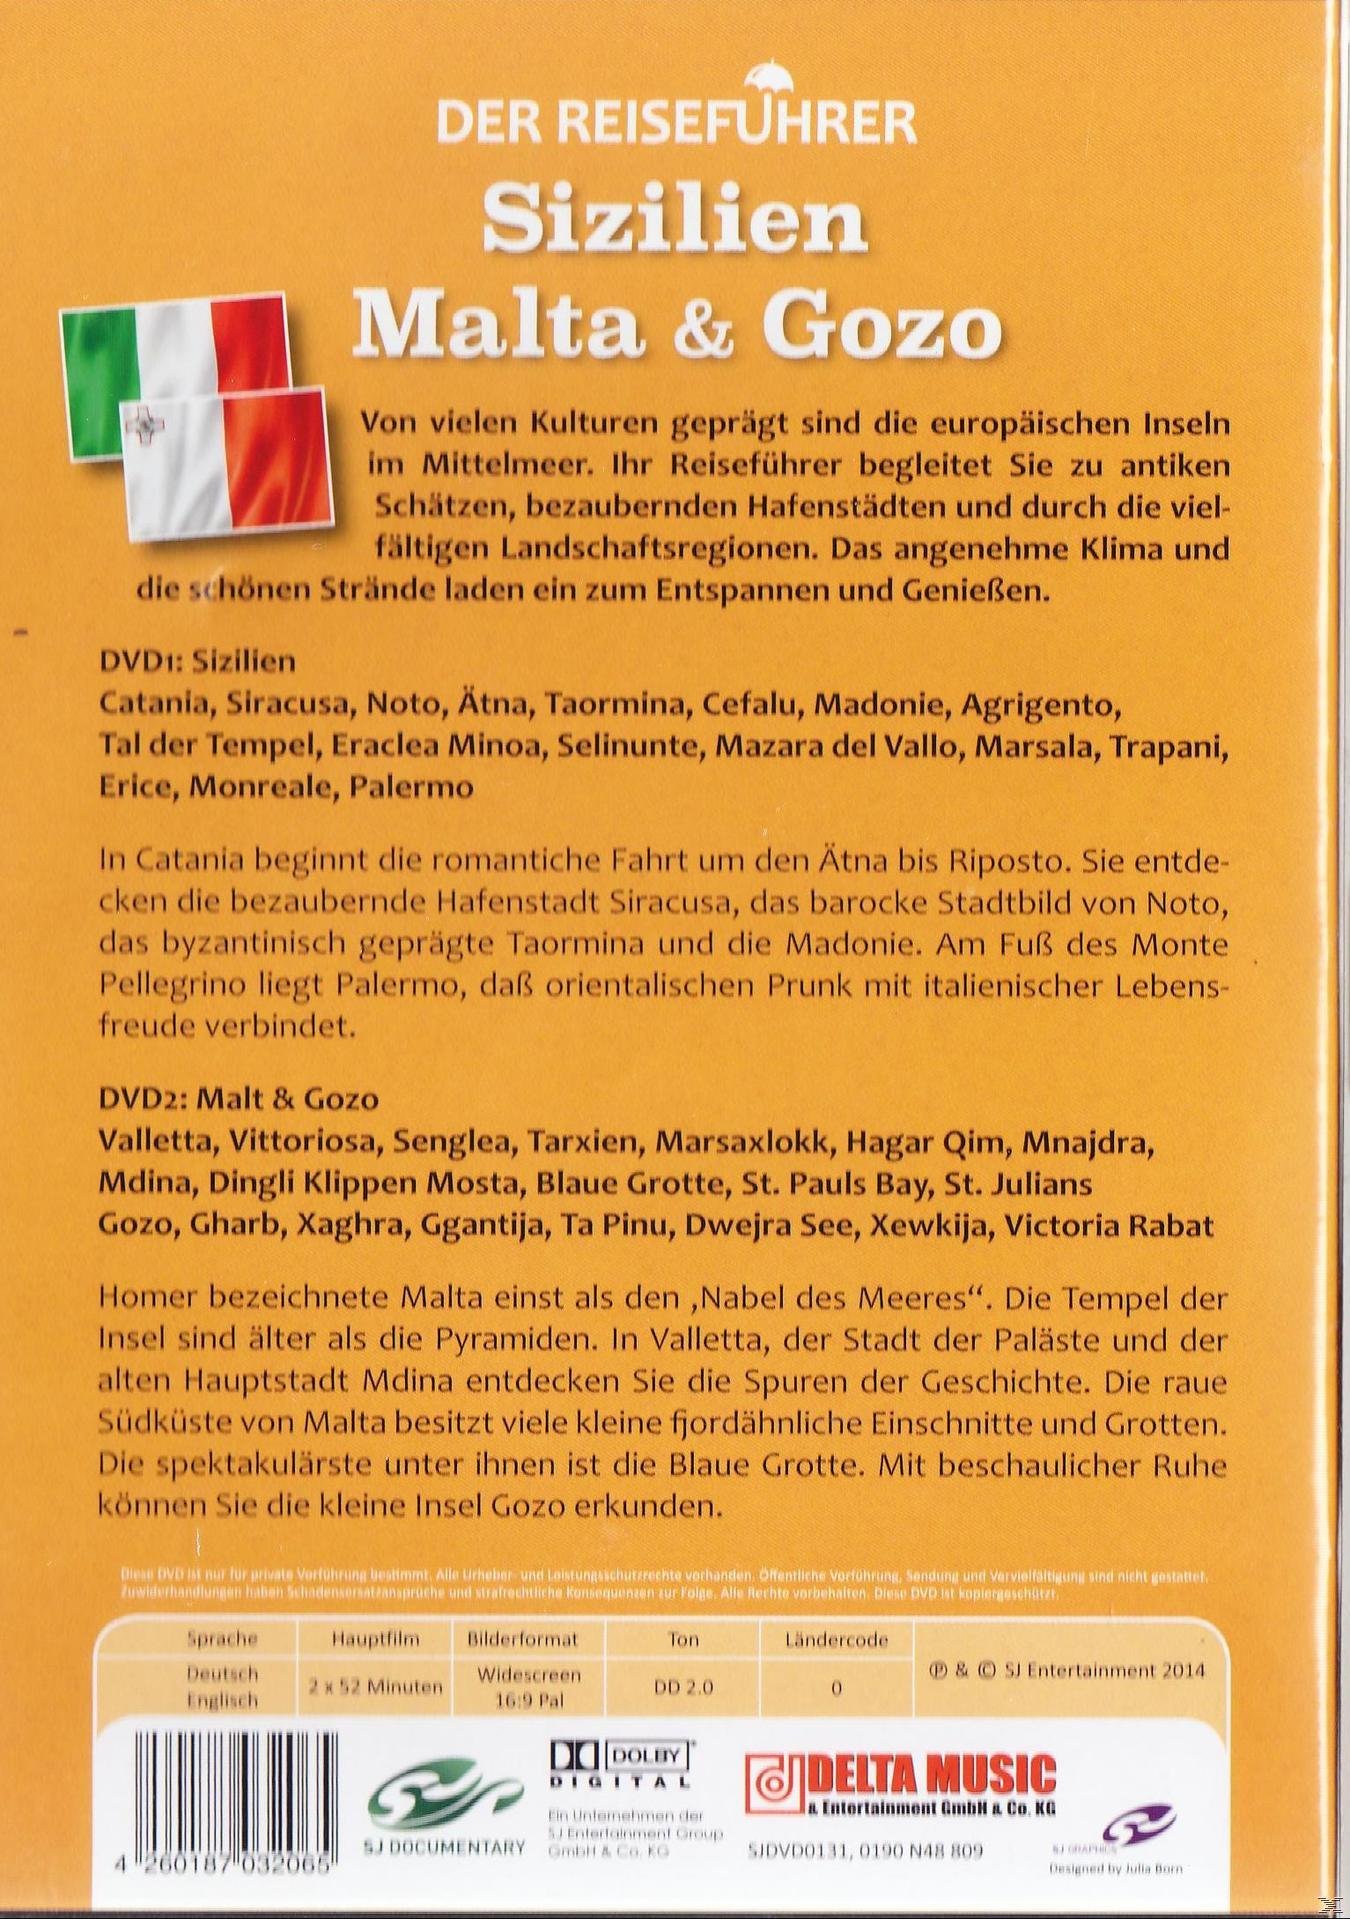 Der Reiseführer - DVD Malta Sizilien, Gozo 